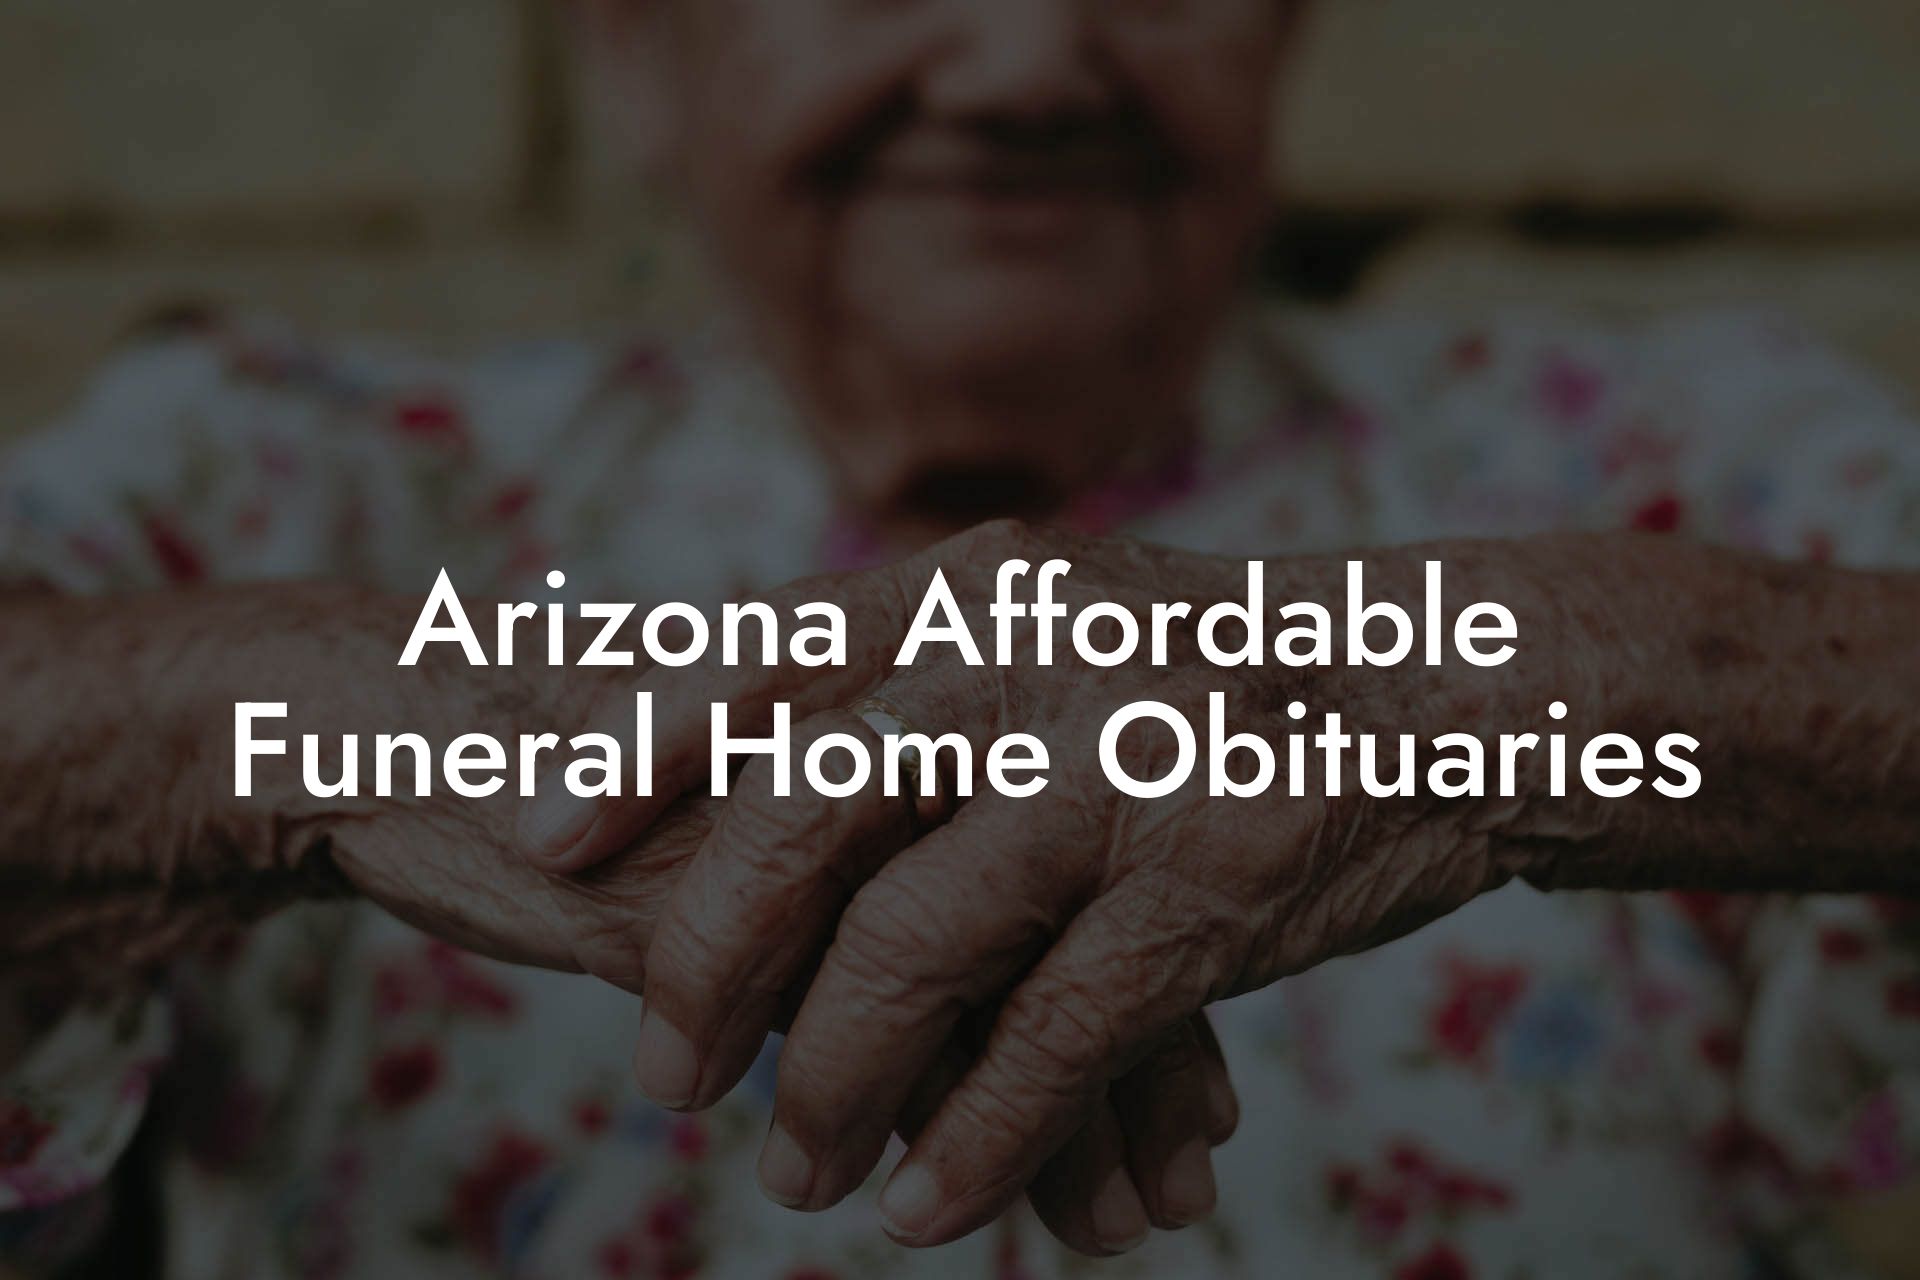 Arizona Affordable Funeral Home Obituaries